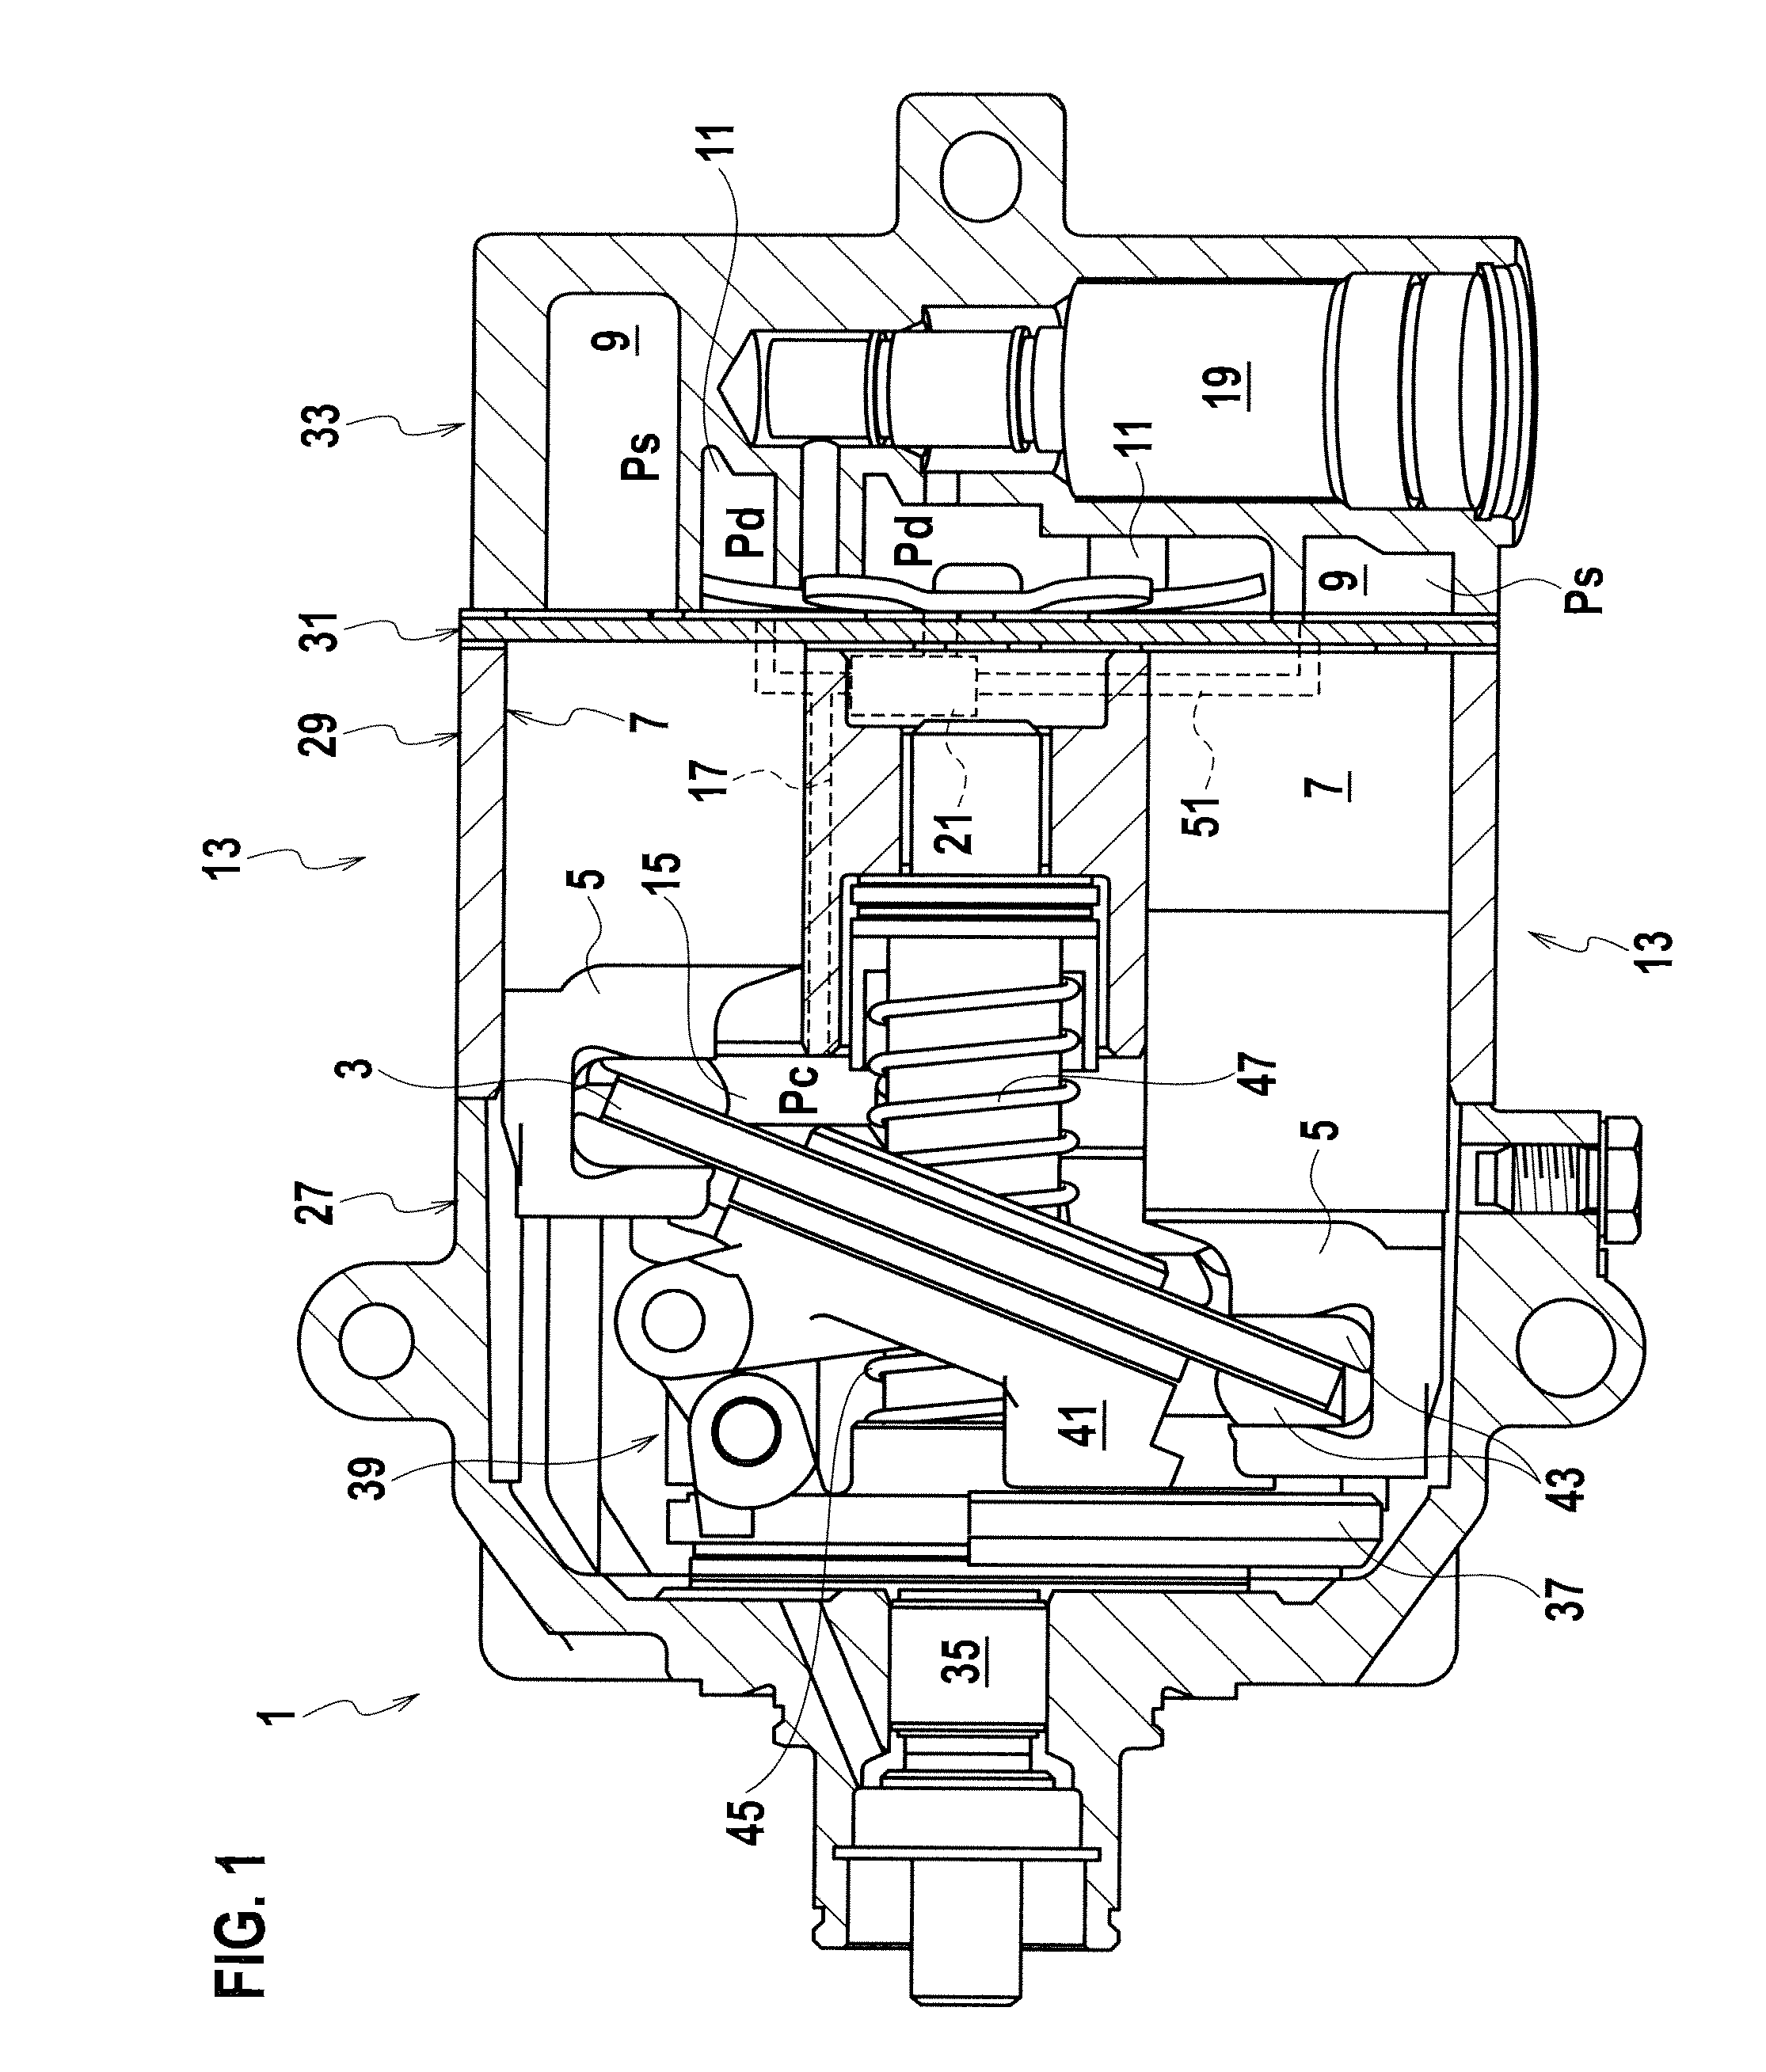 Swash plate type compressor